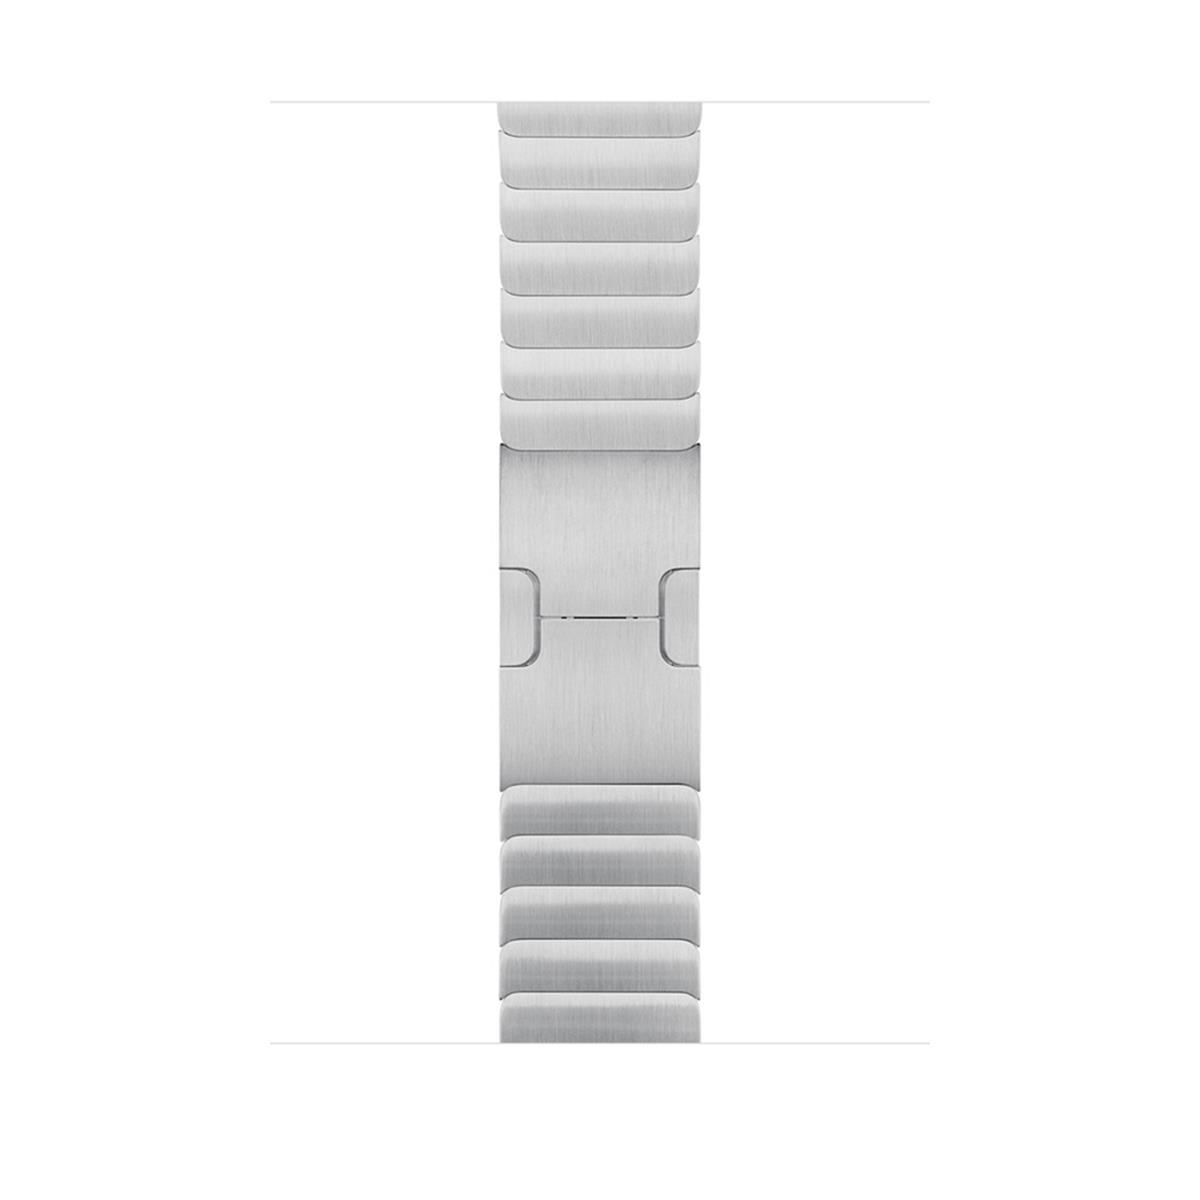 Image of Apple 38mm Stainless Steel Link Bracelet Silver